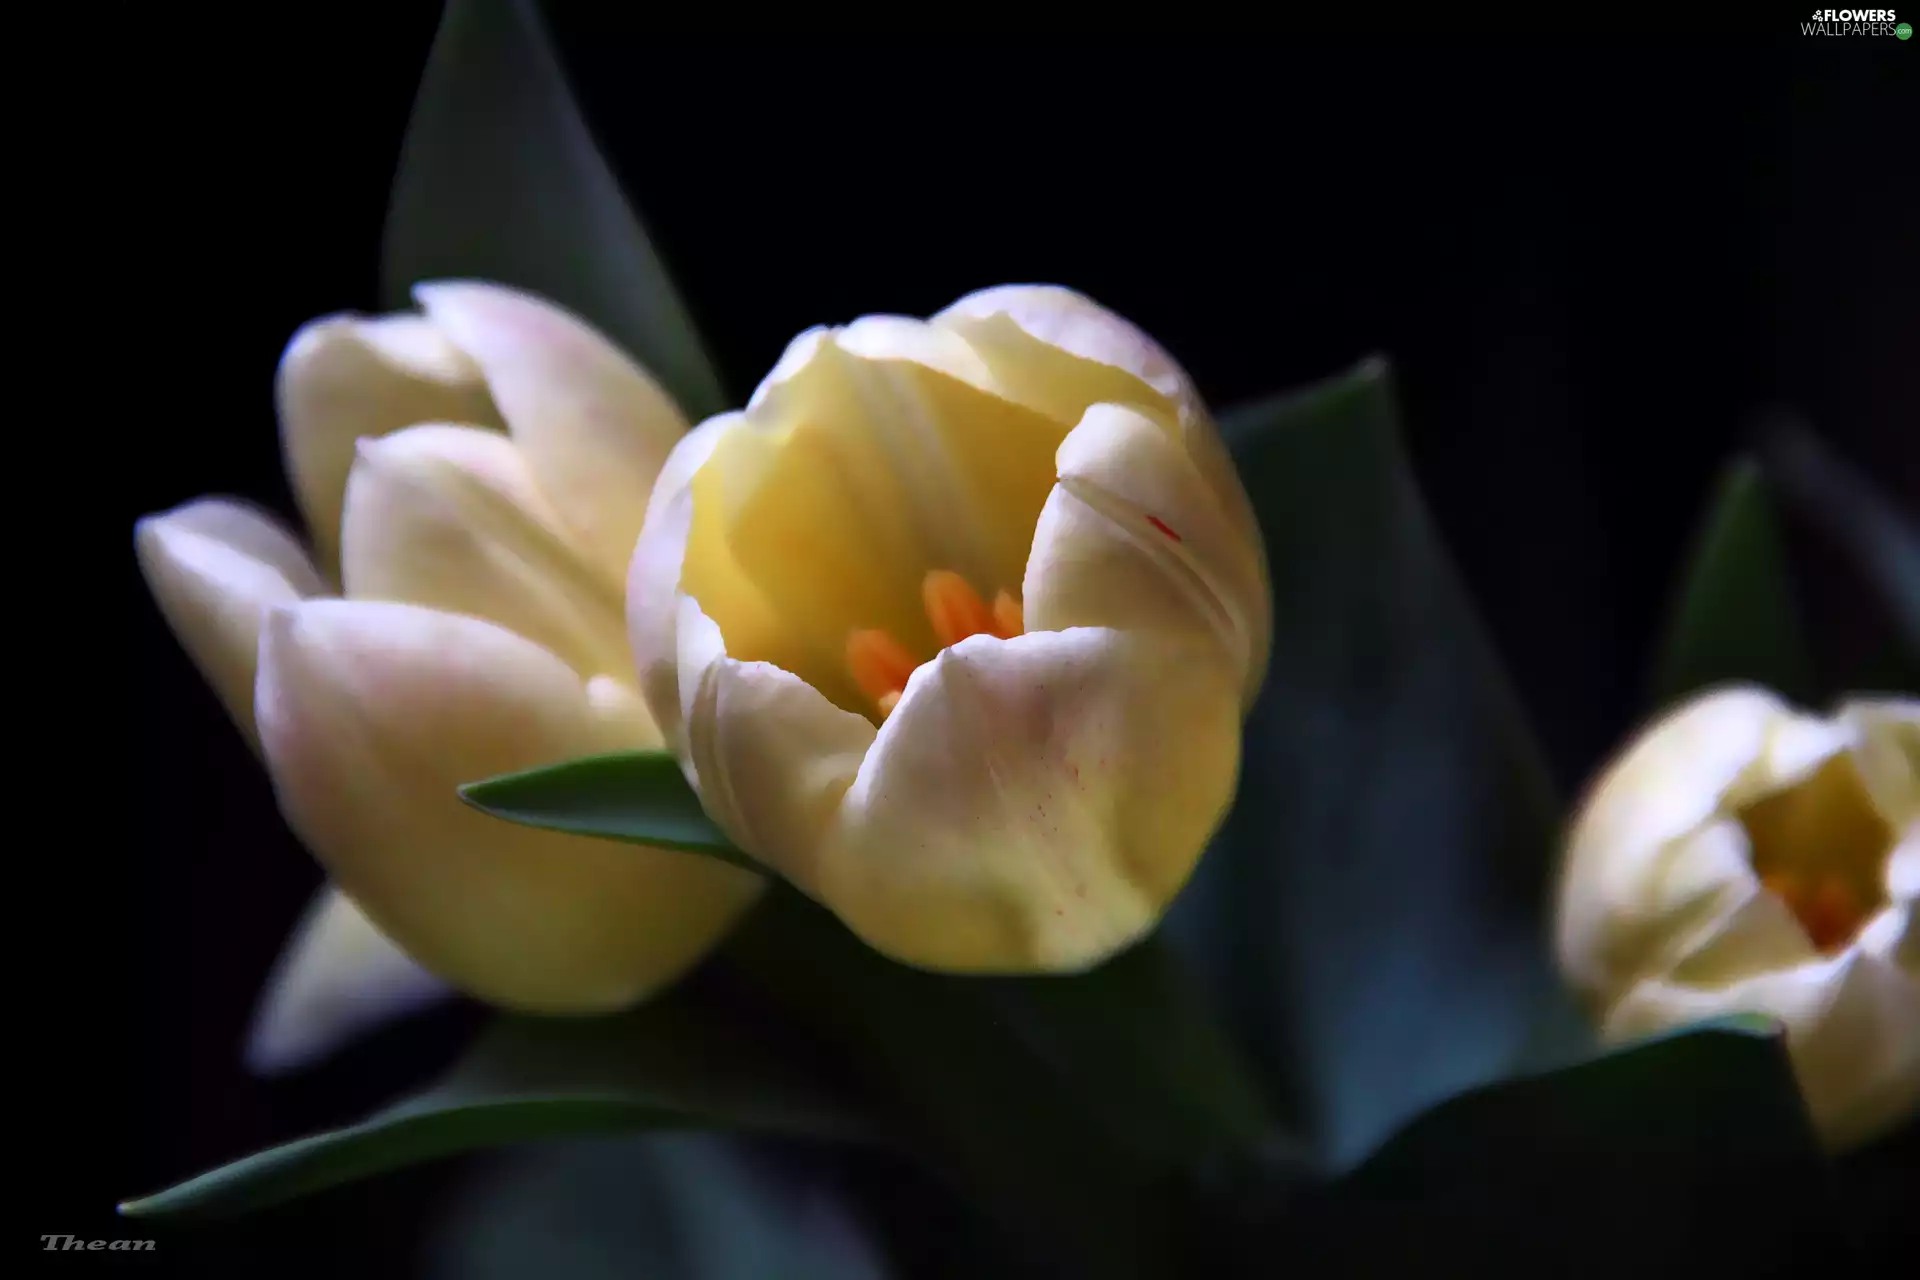 Yellow, Tulips